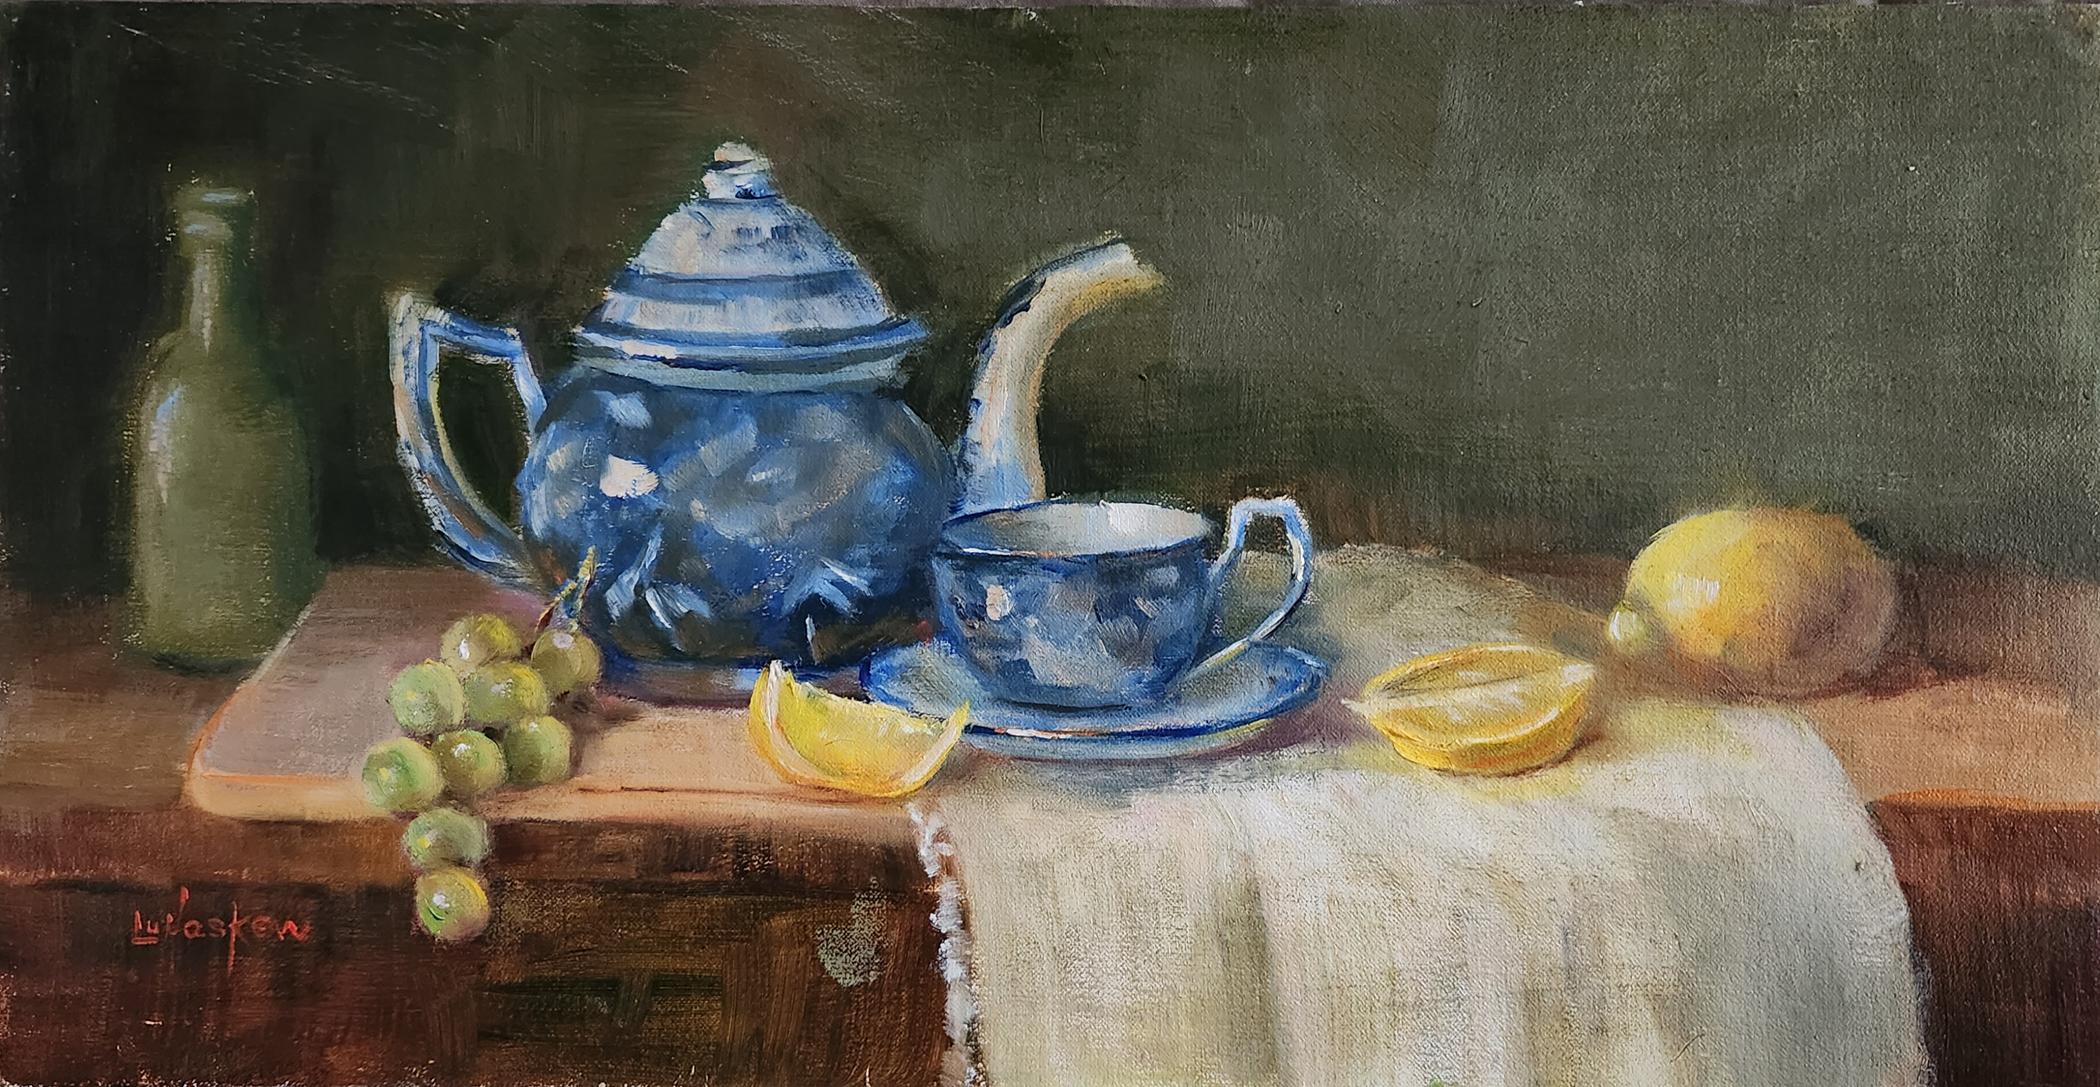 Favorite Teapot, 8x16" oil on board - Painting by Lu Haskew